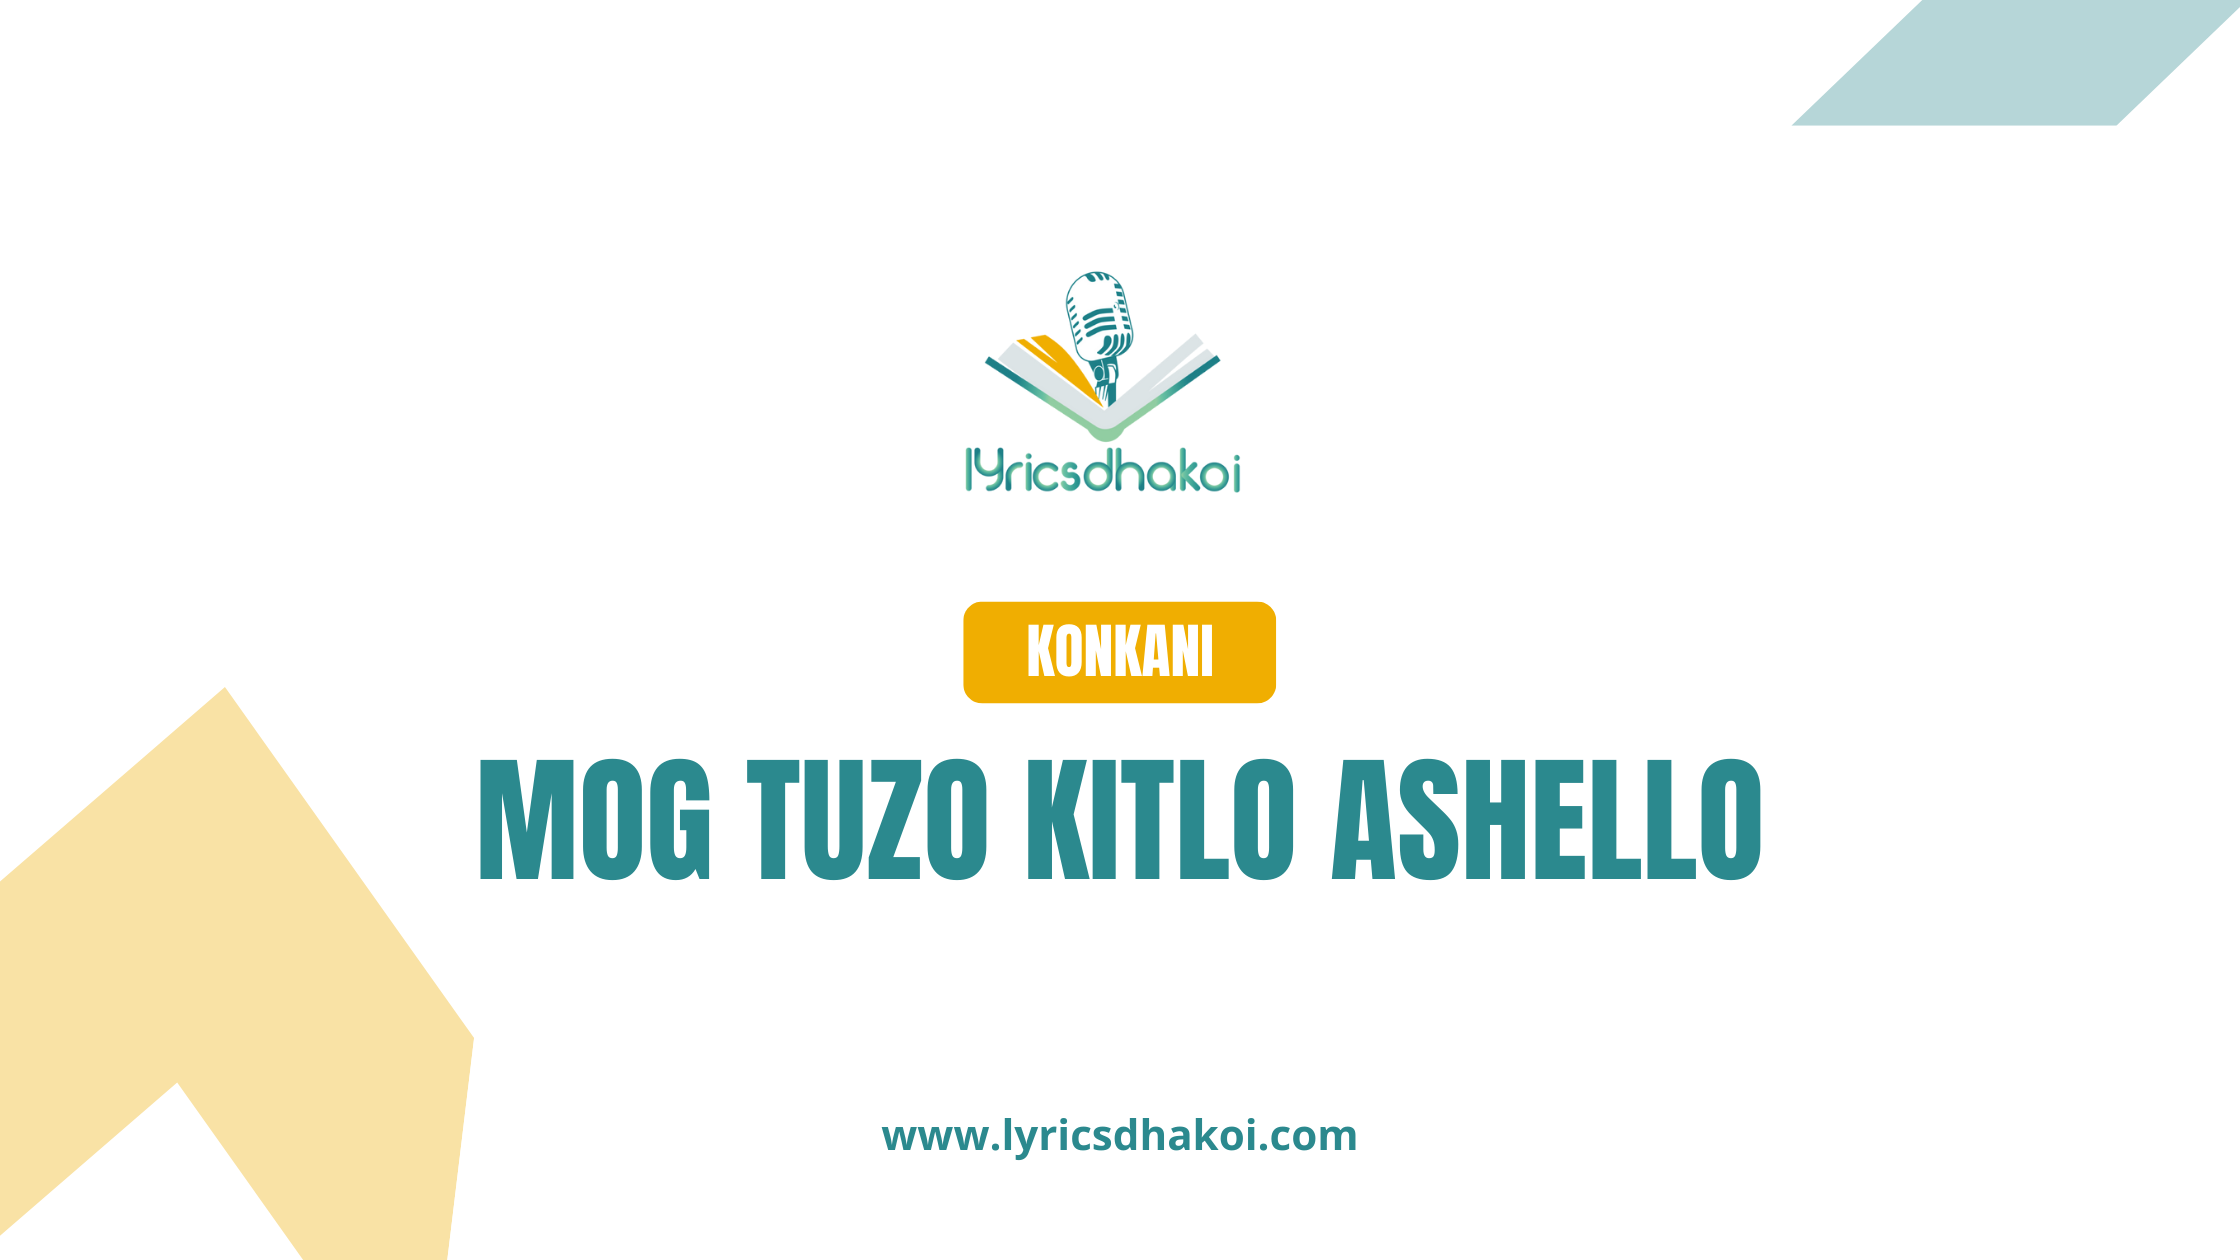 Mog Tuzo Kitlo Ashello Konkani Lyrics for Karaoke Online - LyricsDhakoi.com